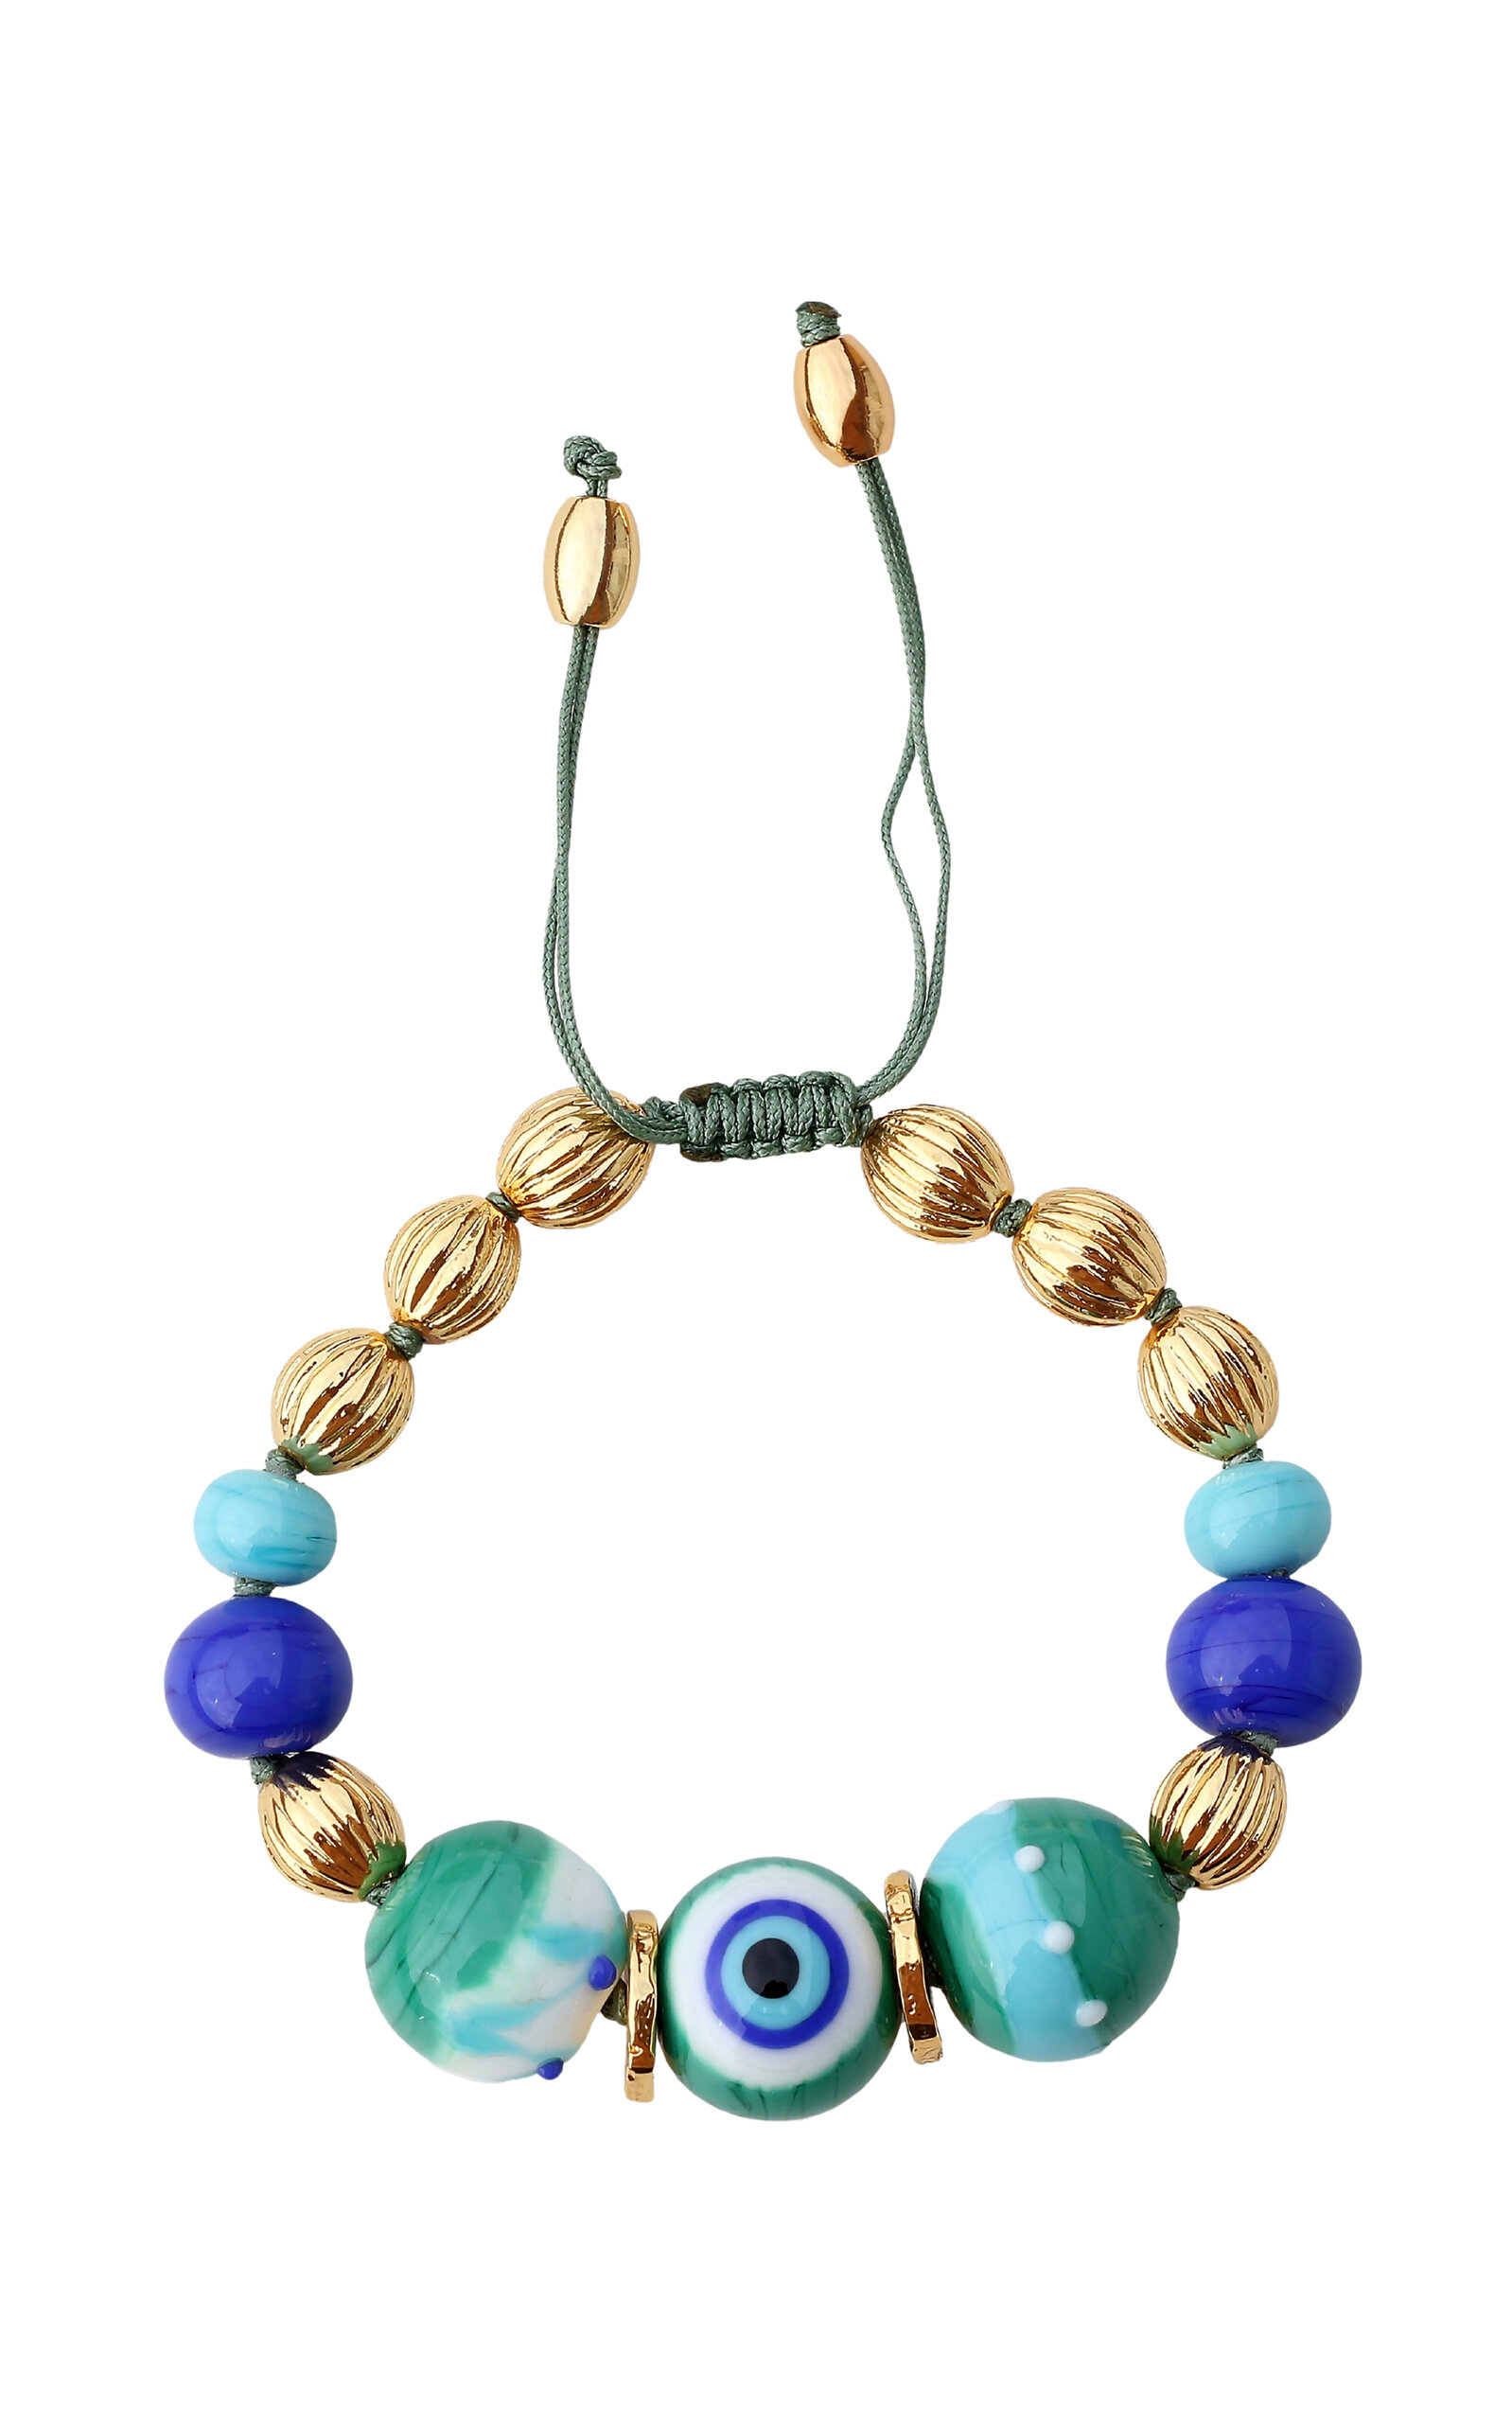 Murano Glass Beads Charm Bracelet